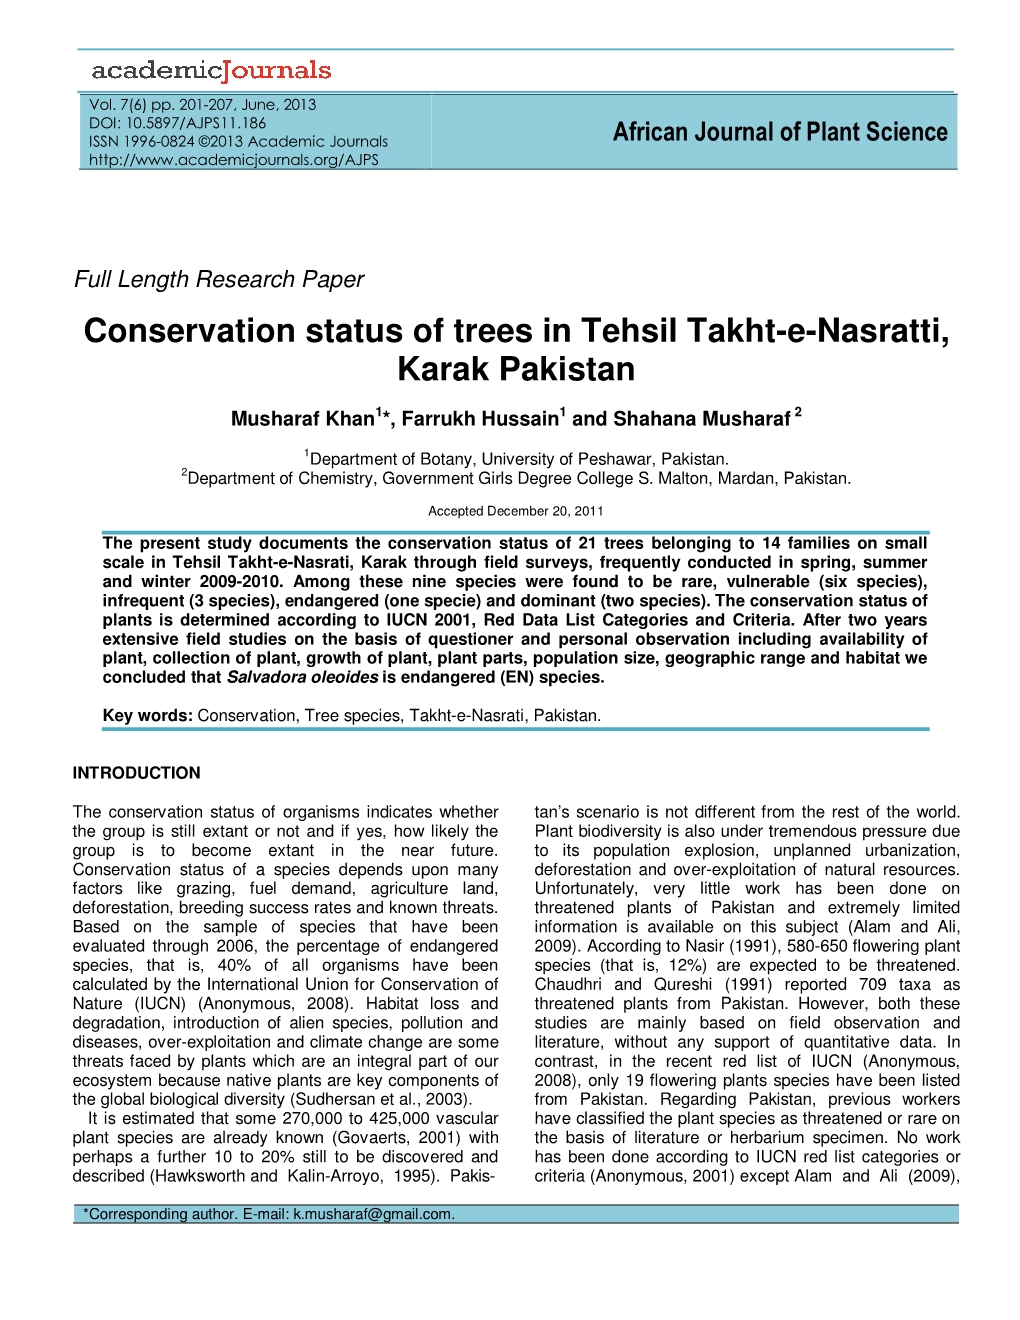 Conservation Status of Trees in Tehsil Takht-E-Nasratti, Karak Pakistan